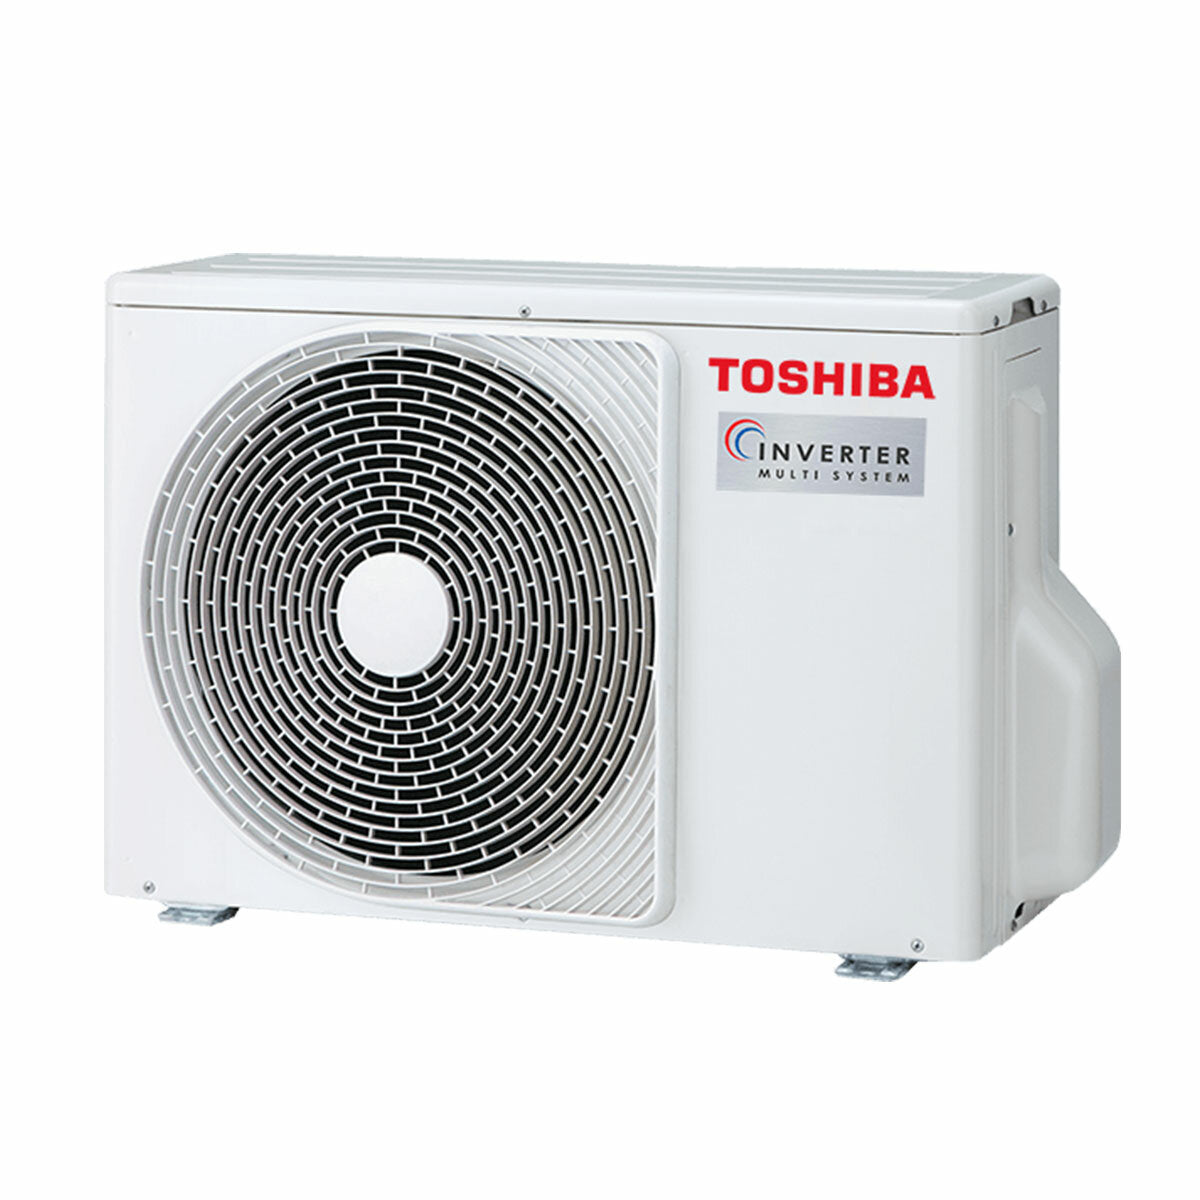 Toshiba ducted air conditioner U2 trial split 9000+12000+16000 BTU inverter A+++ external unit 7 kW